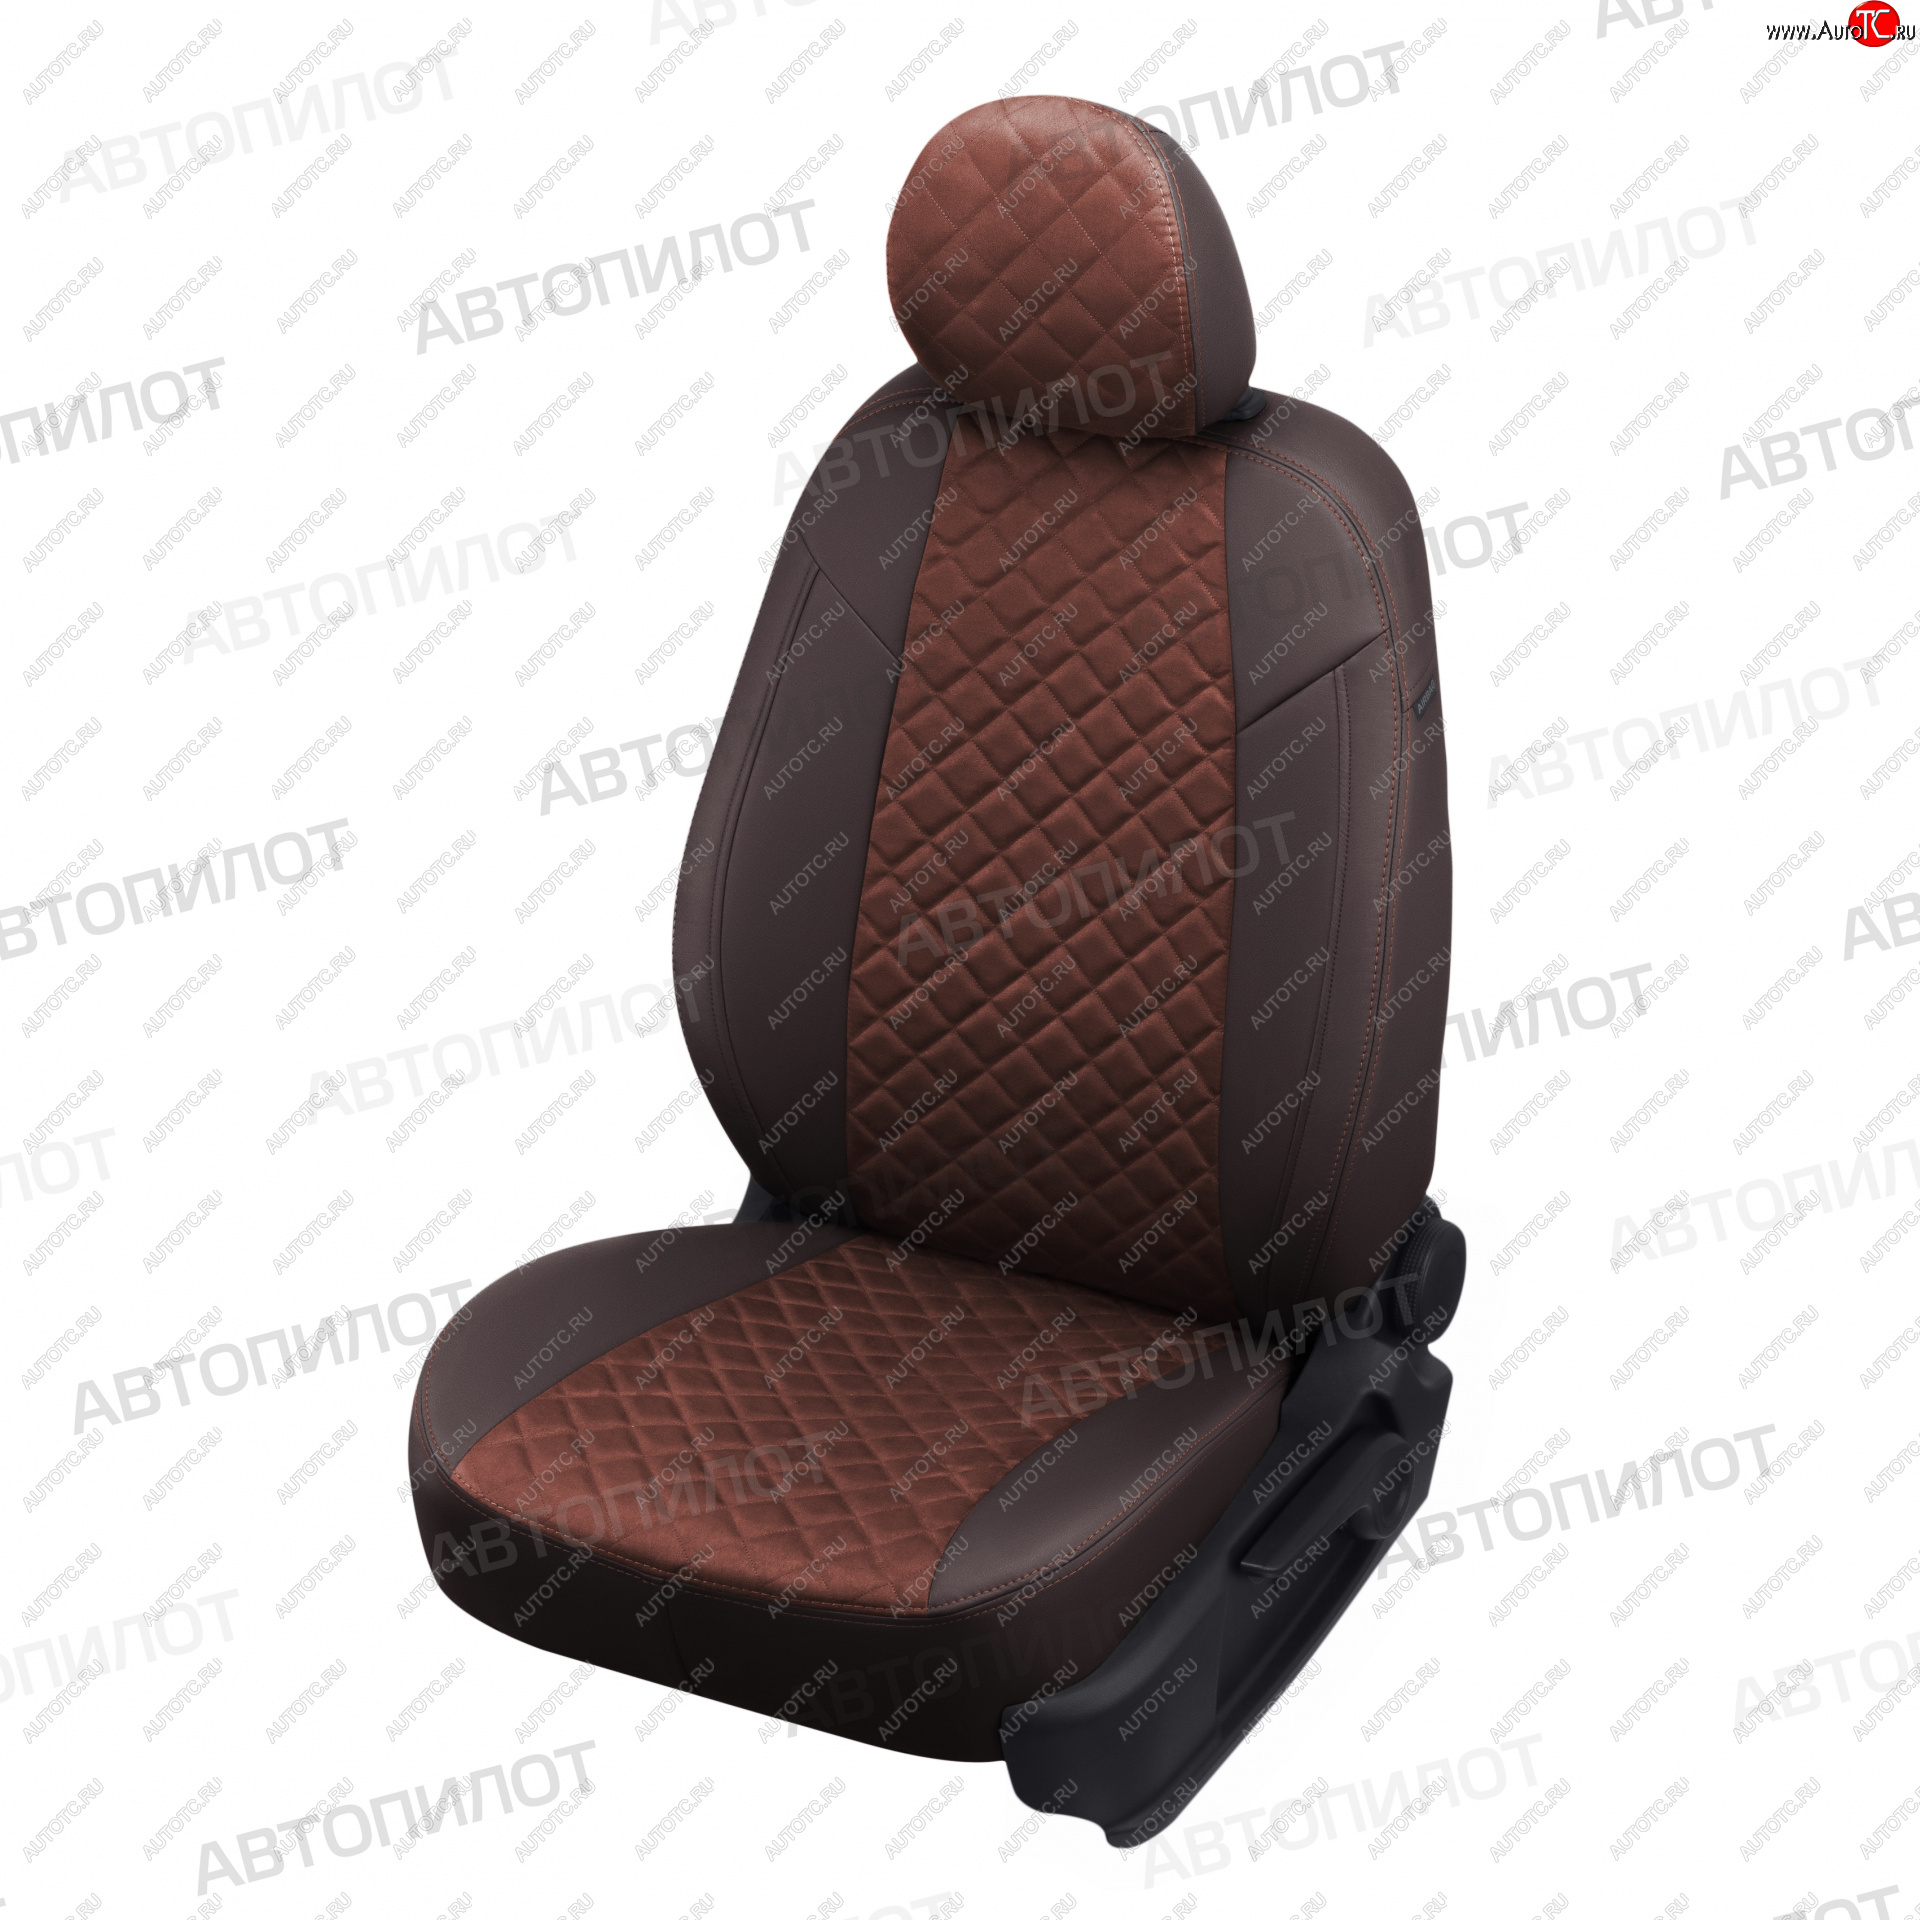 7 799 р. Чехлы сидений (5 мест, экокожа/алькантара) Автопилот Ромб  Ford Galaxy  2 (2006-2015) (шоколад)